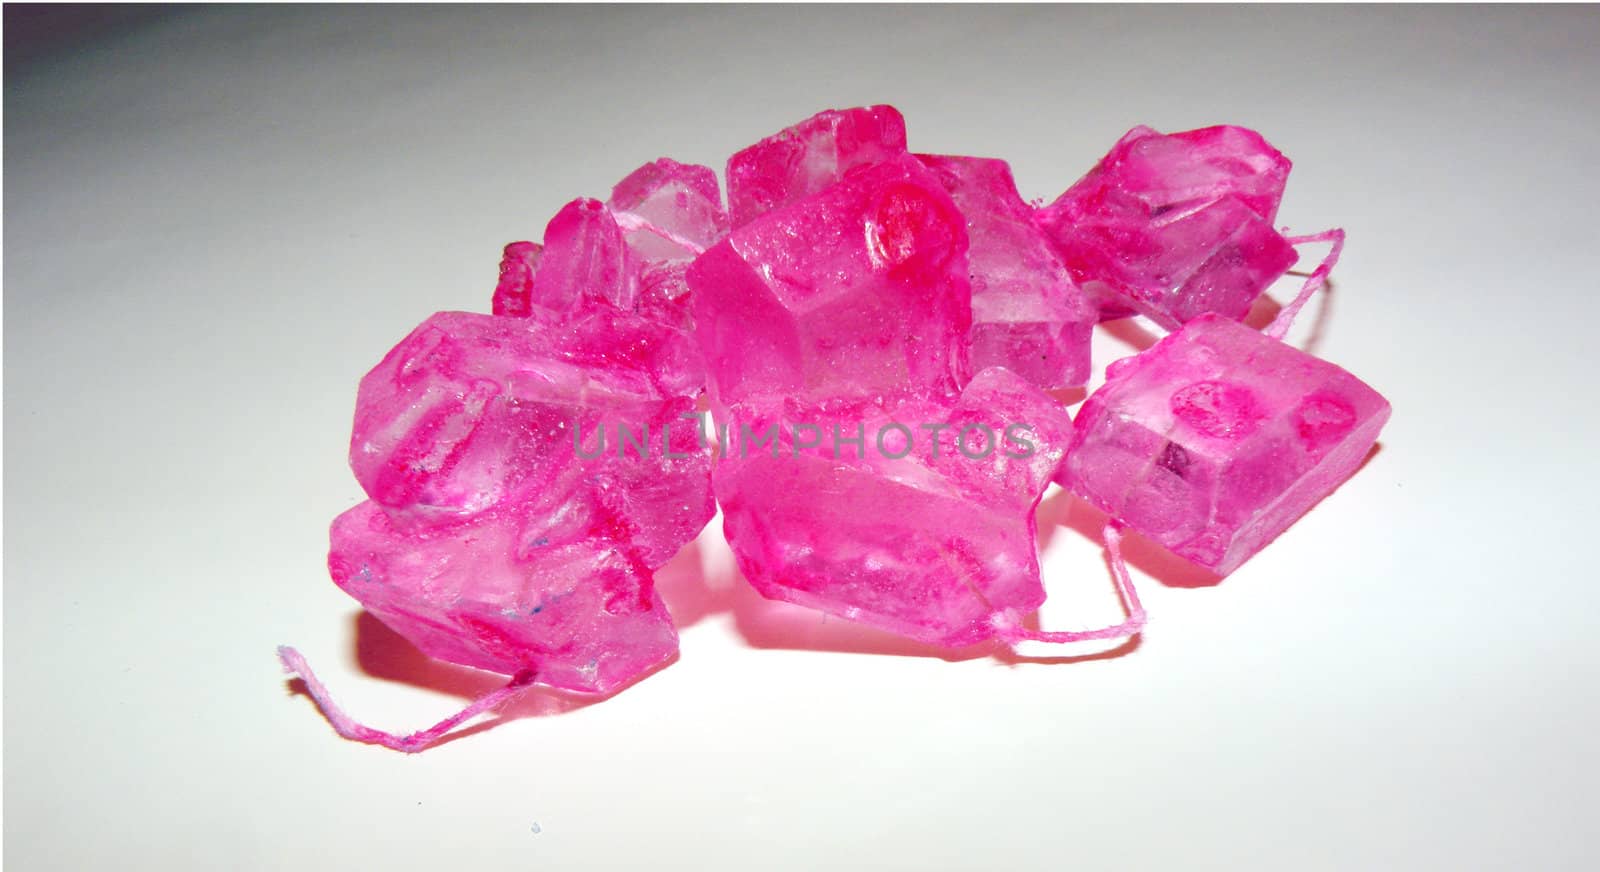 pink rock candy by photosbyrob